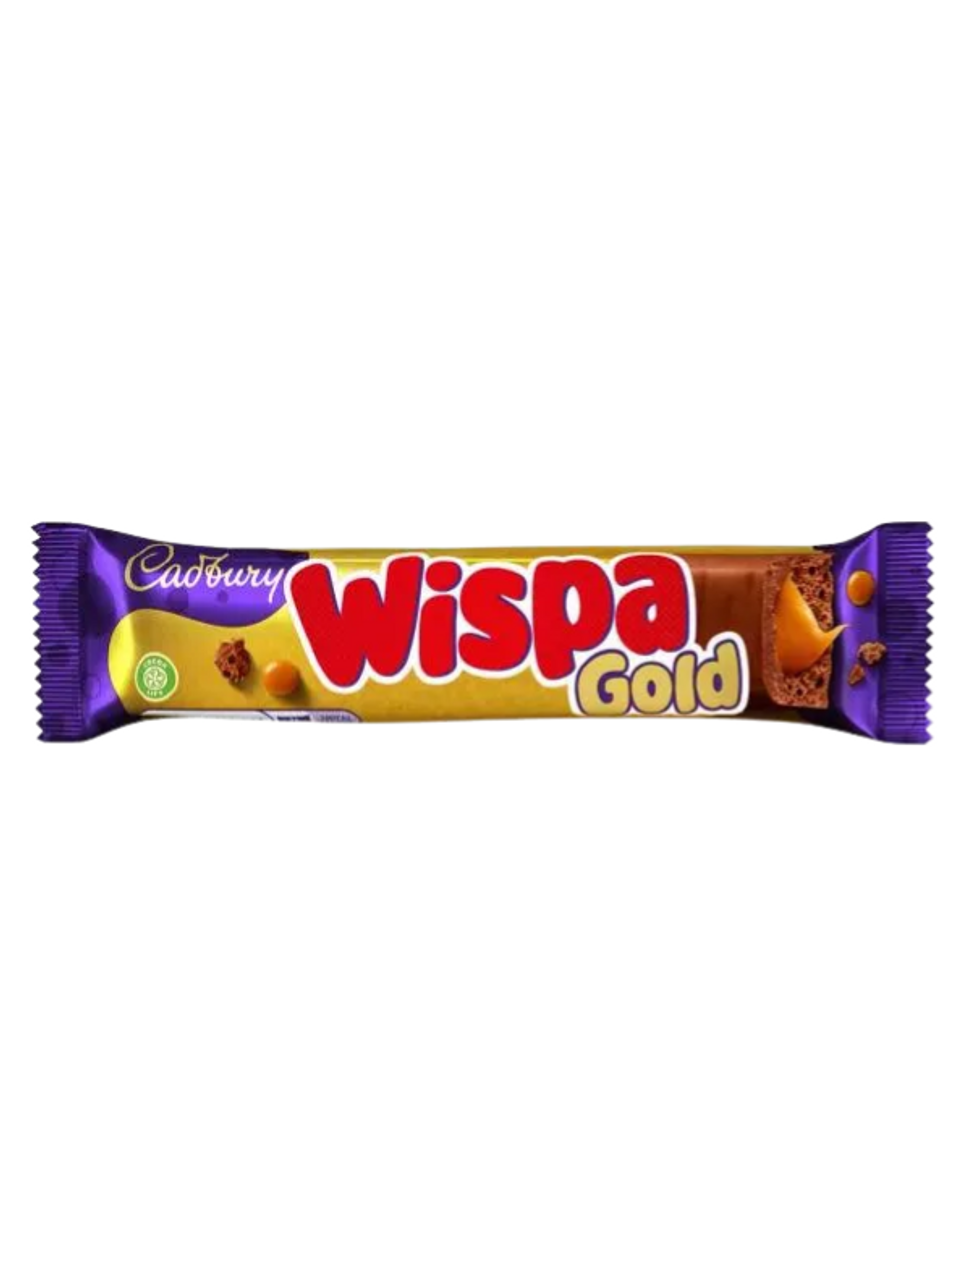 Cadbury Wispa GOLD Chocolate Bar 48g -SAME DAY DISPATCH